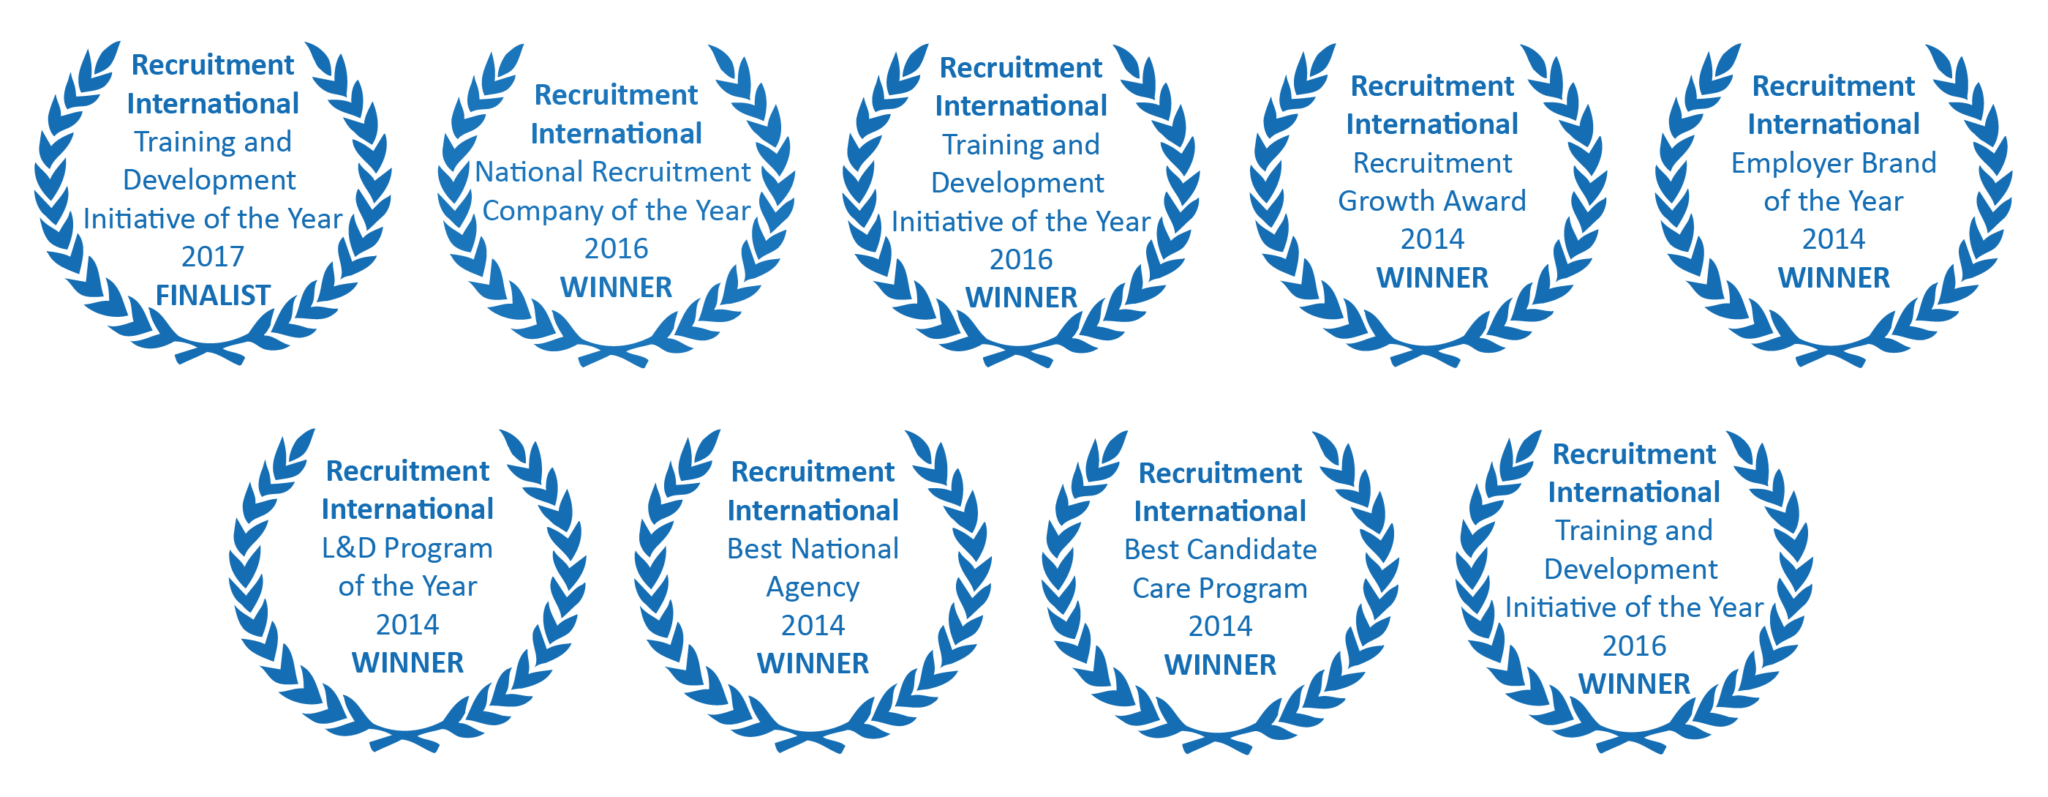 recruitment international awards